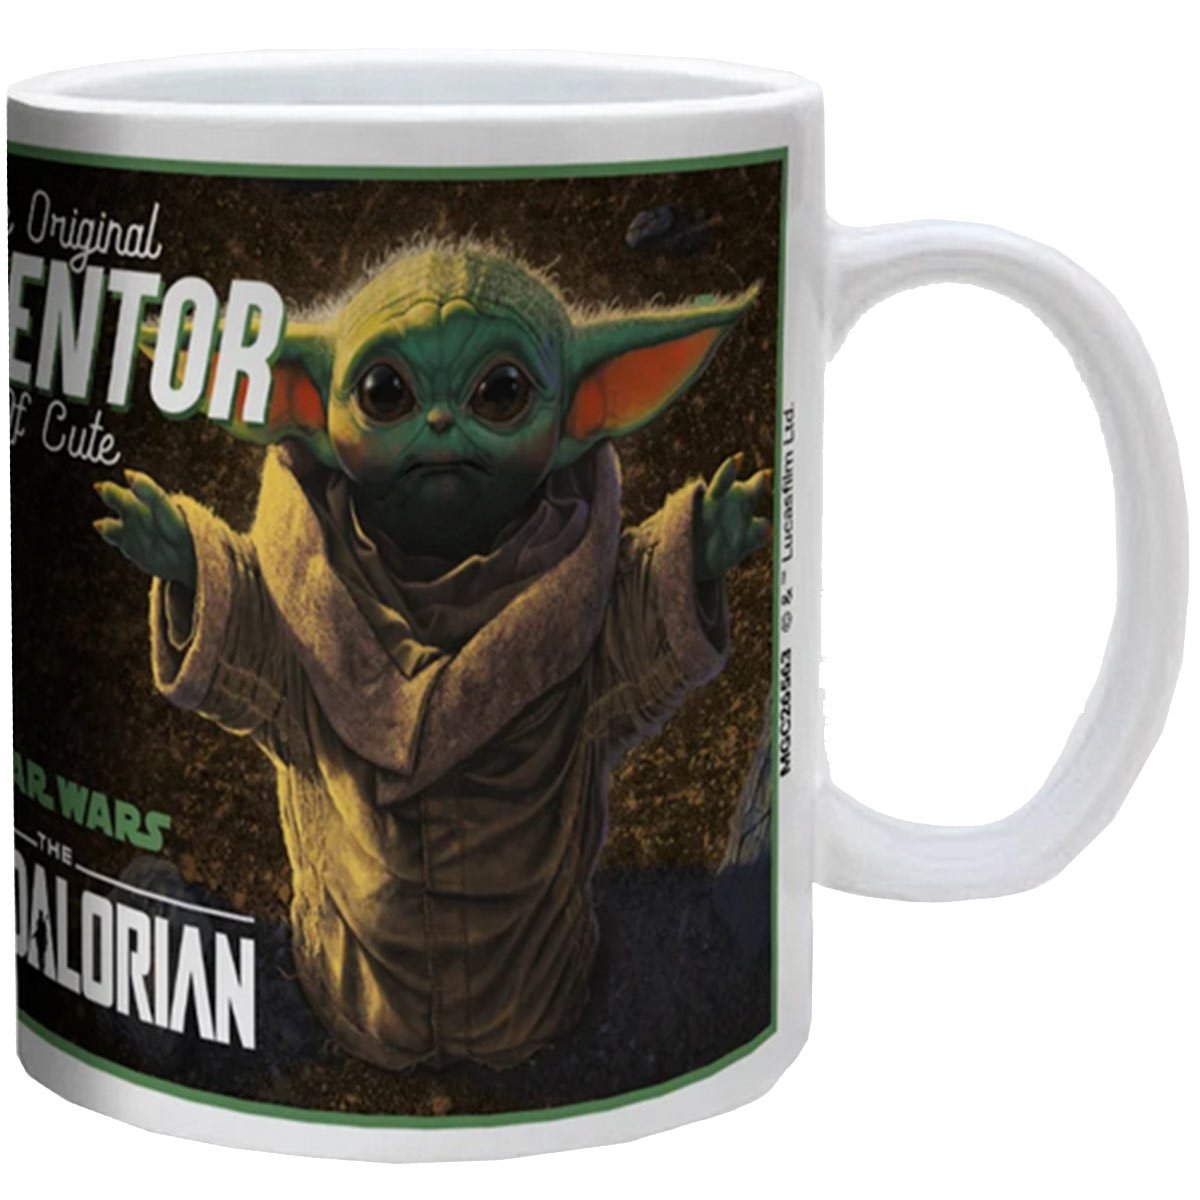 Star Wars: The Mandalorian The Inventor 11 oz. Original Cute Of Mug